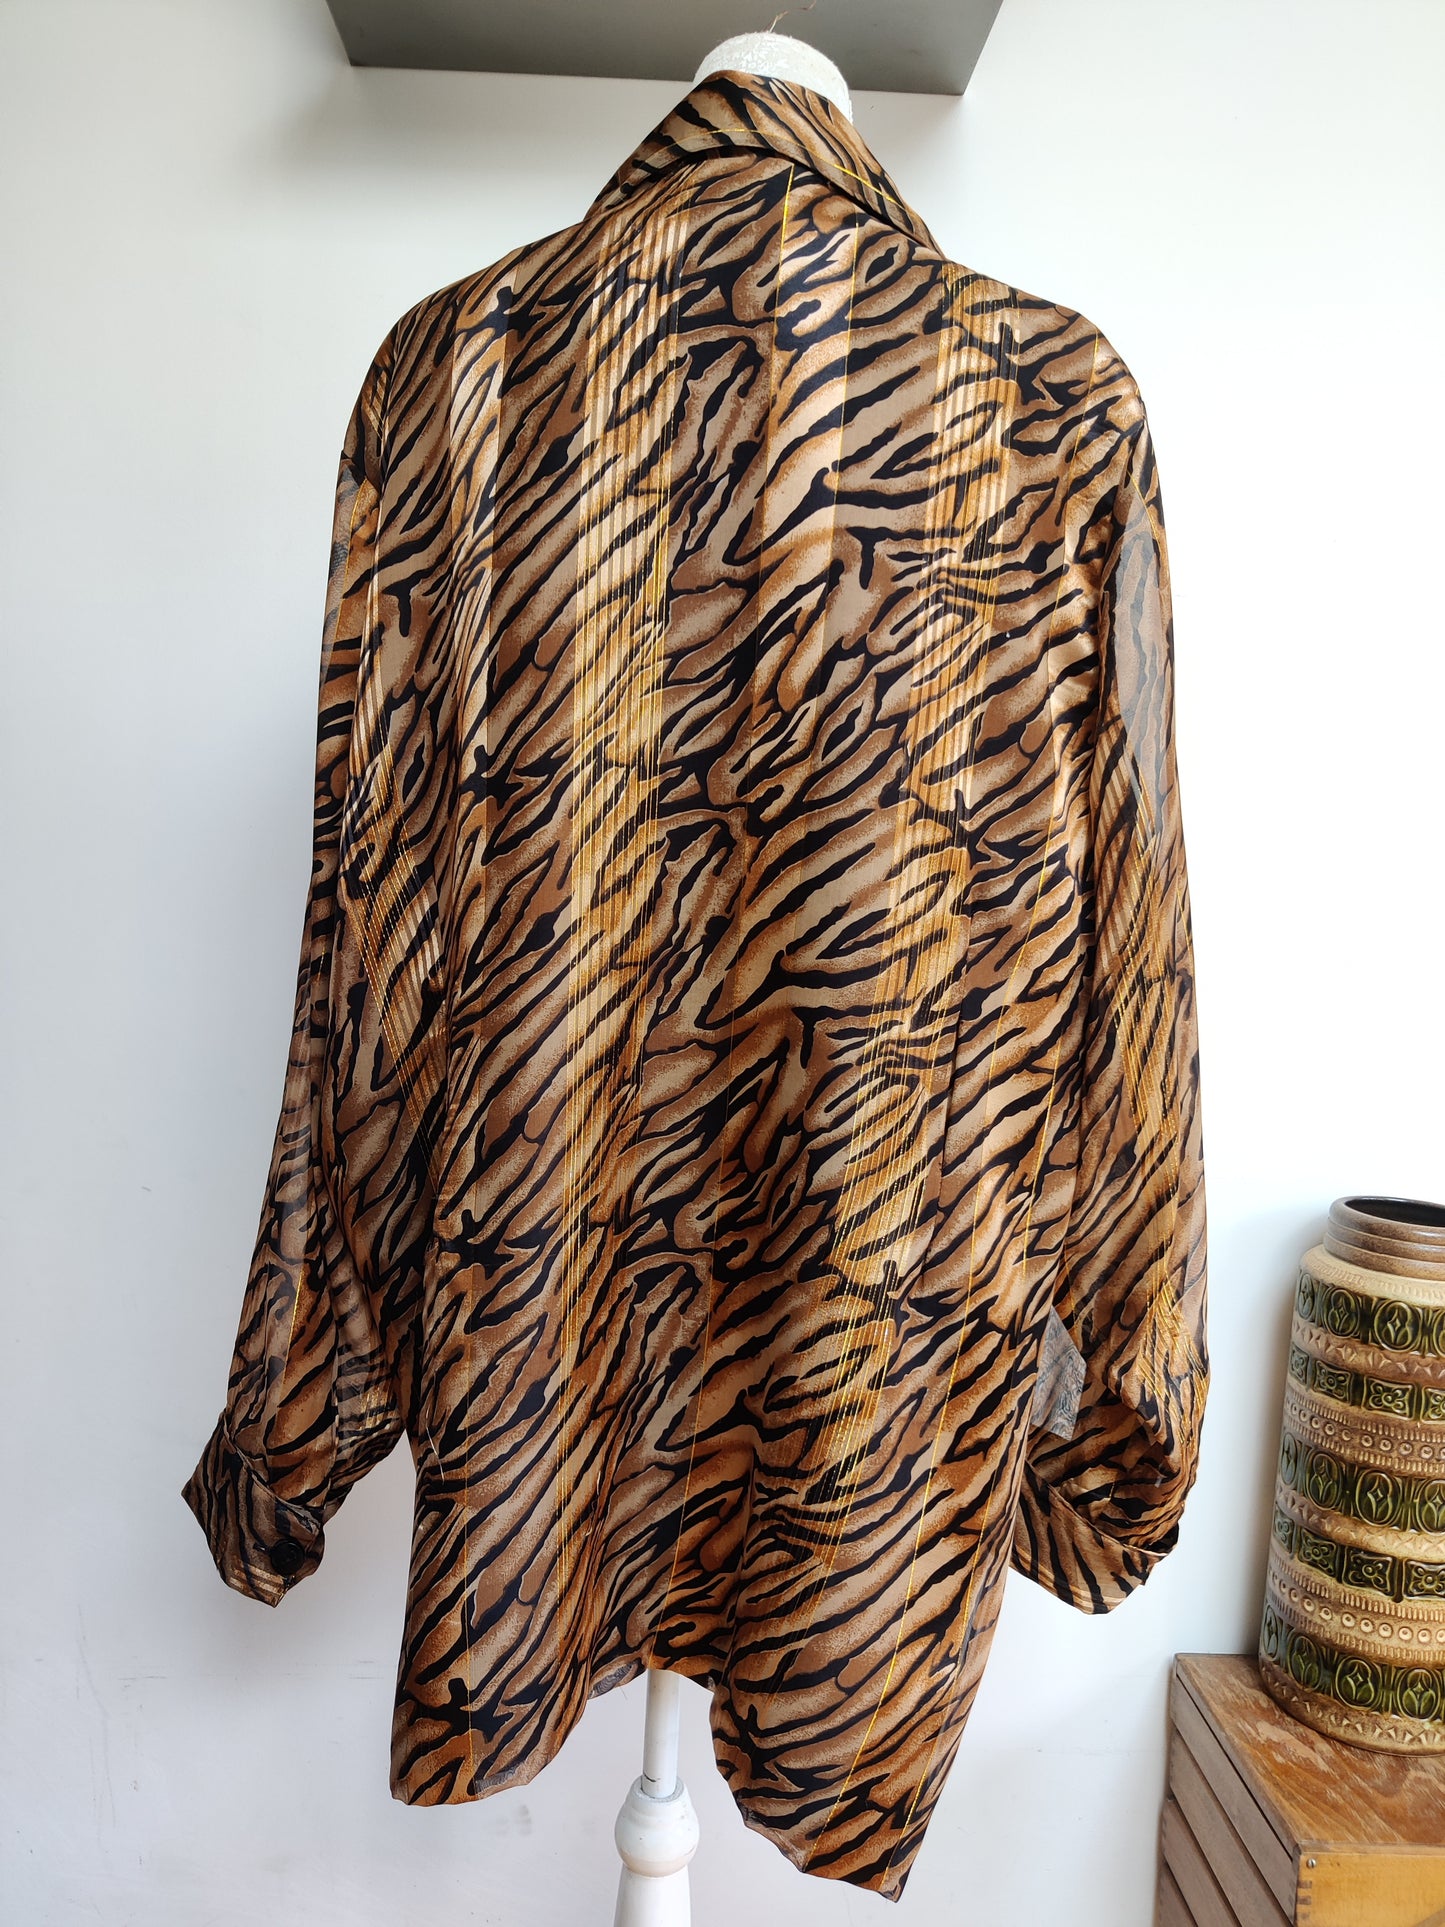 Tiger print jacket size 26